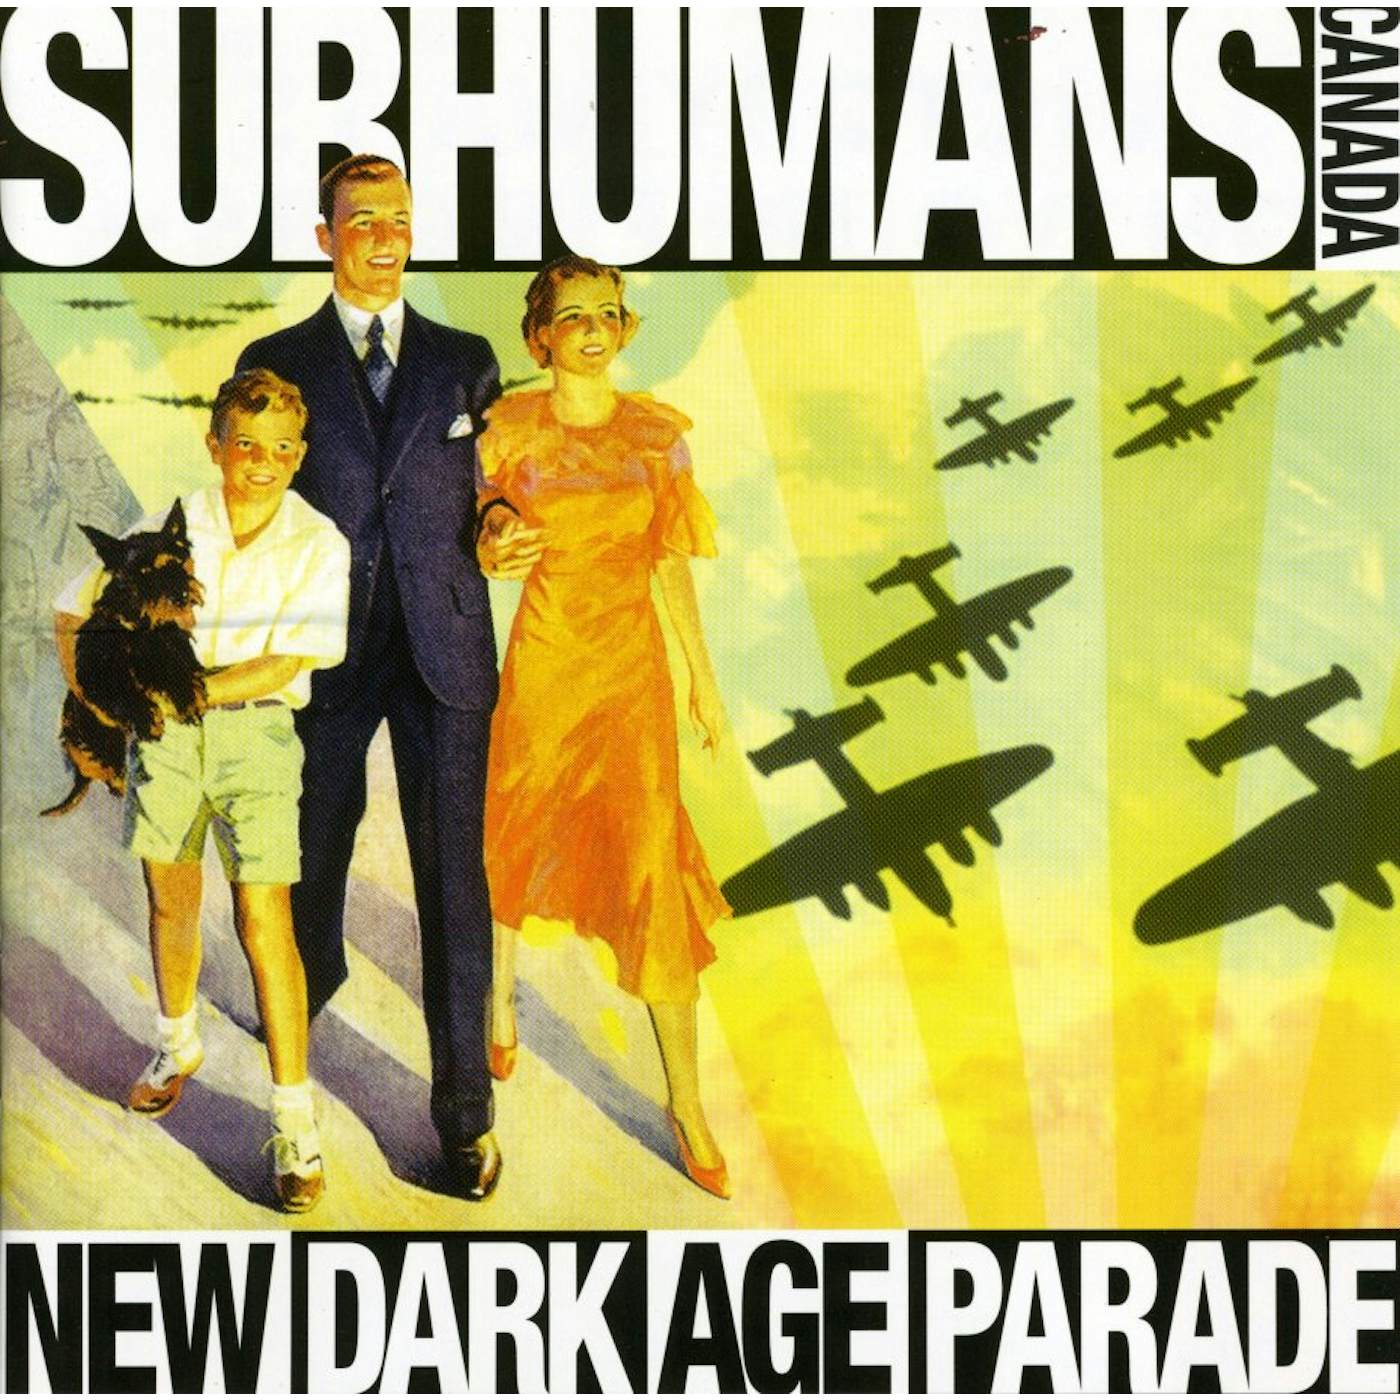 Subhumans NEW DARK AGE PARADE CD